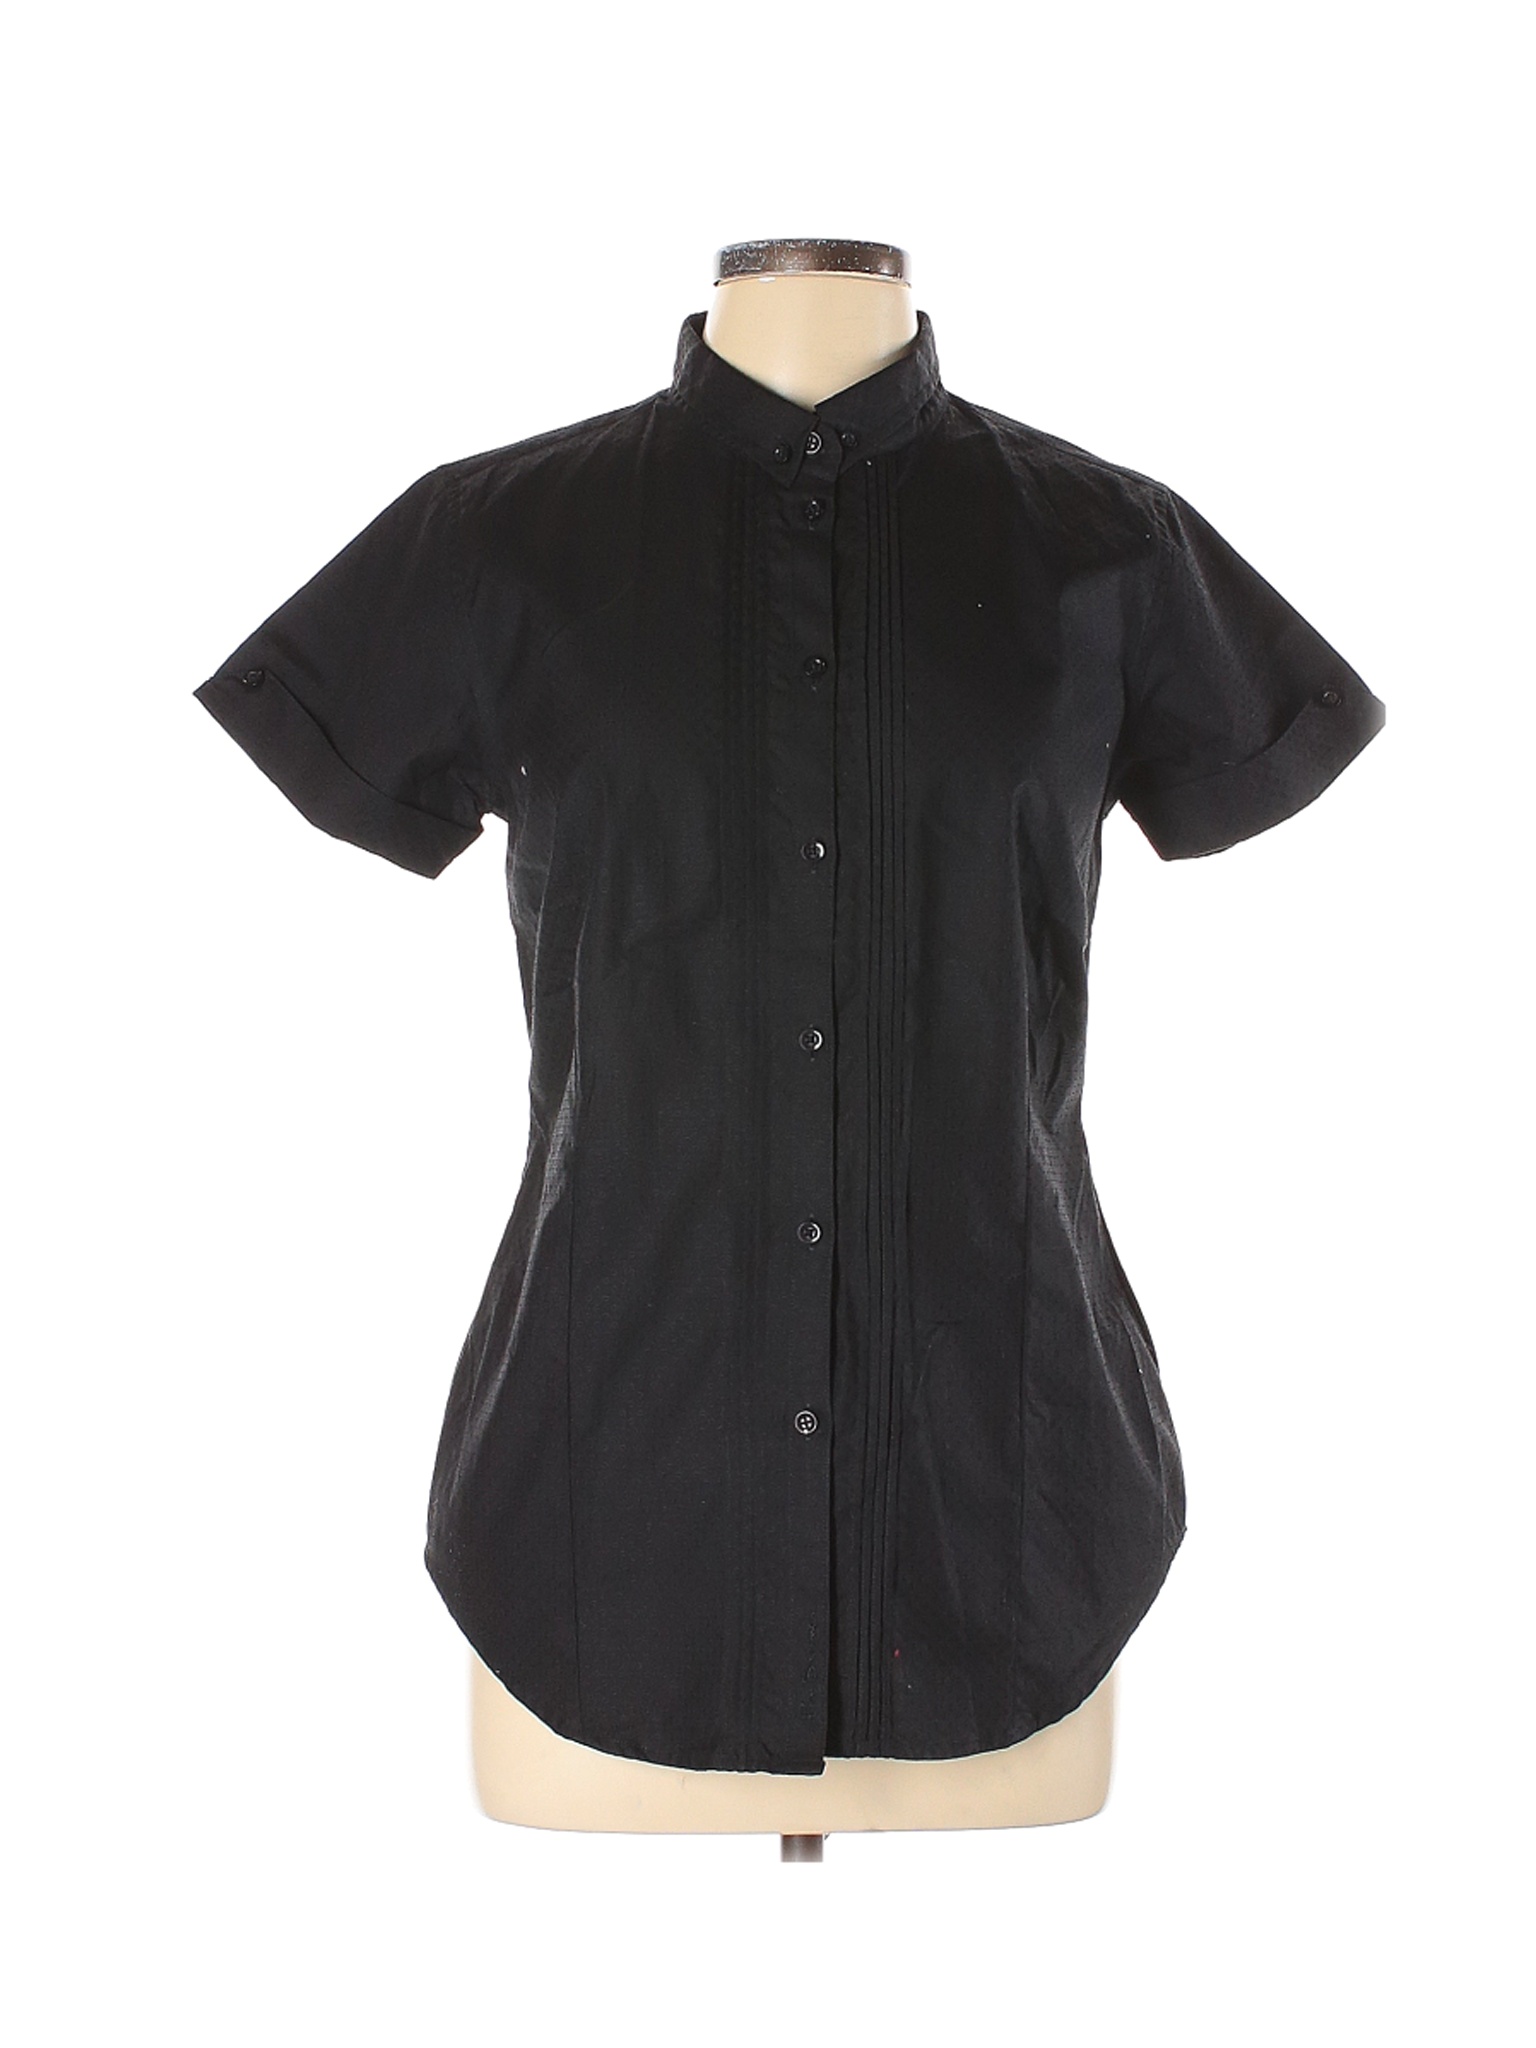 Ben Sherman Women Black Short Sleeve Button-Down Shirt L | eBay